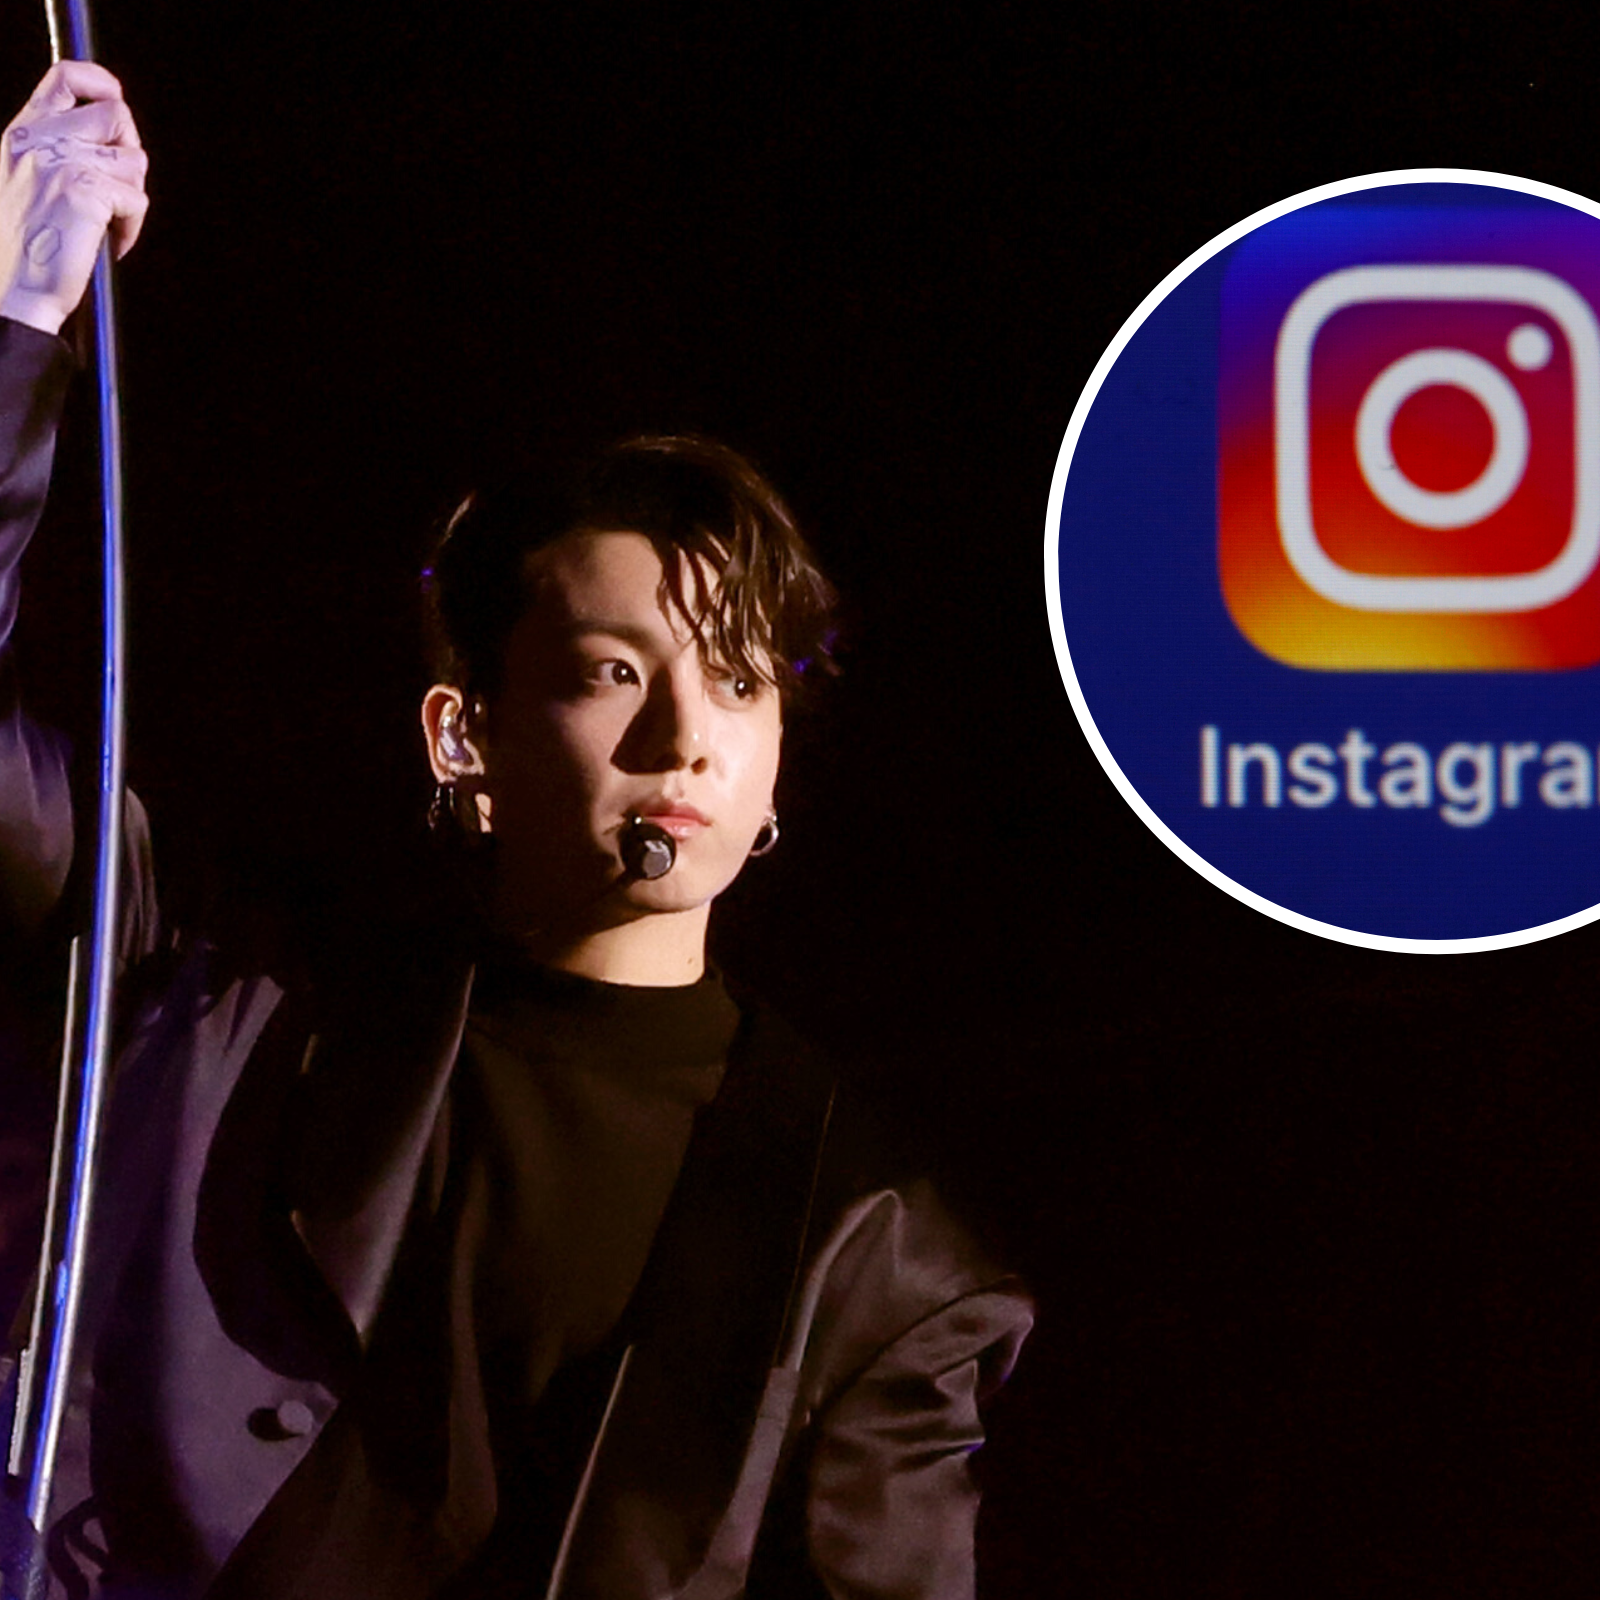 Jungkook Instagram account: BTS' Jungkook deletes his Instagram